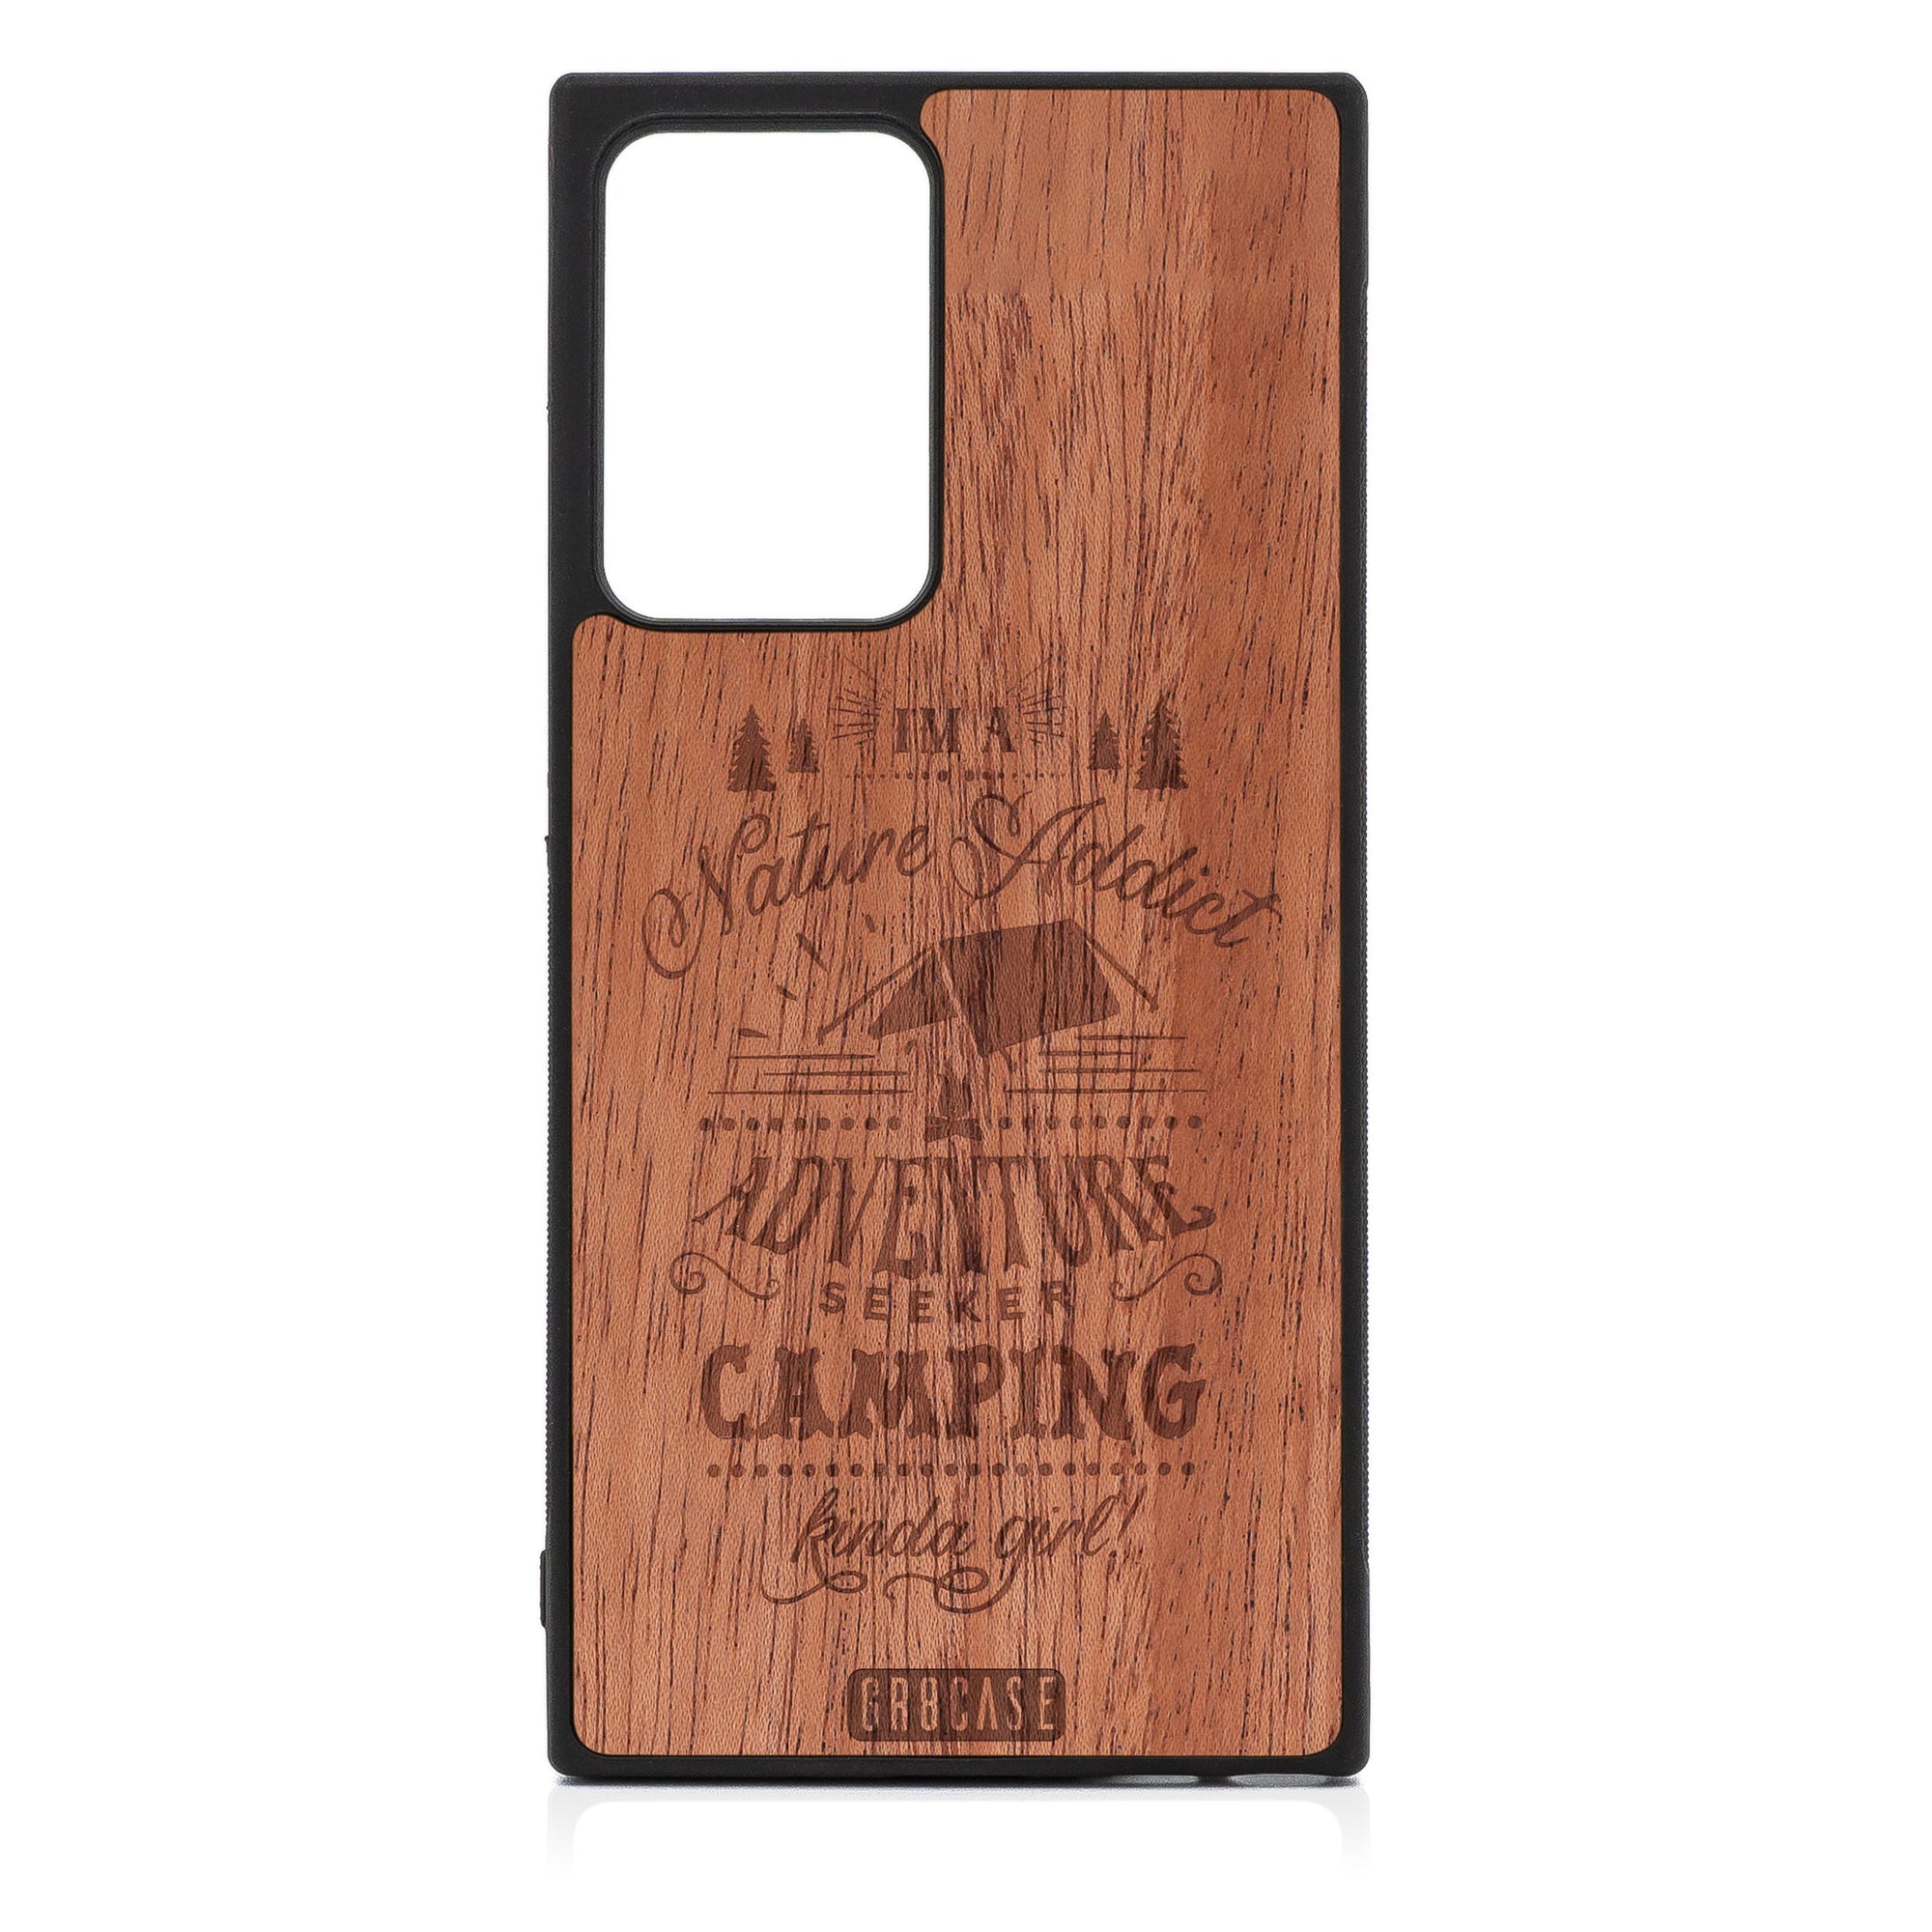 Ima Nature Addicat Adventure Seeker Camping Kinda Girl Design Wood Case For Samsung Galaxy Note 20 Ultra